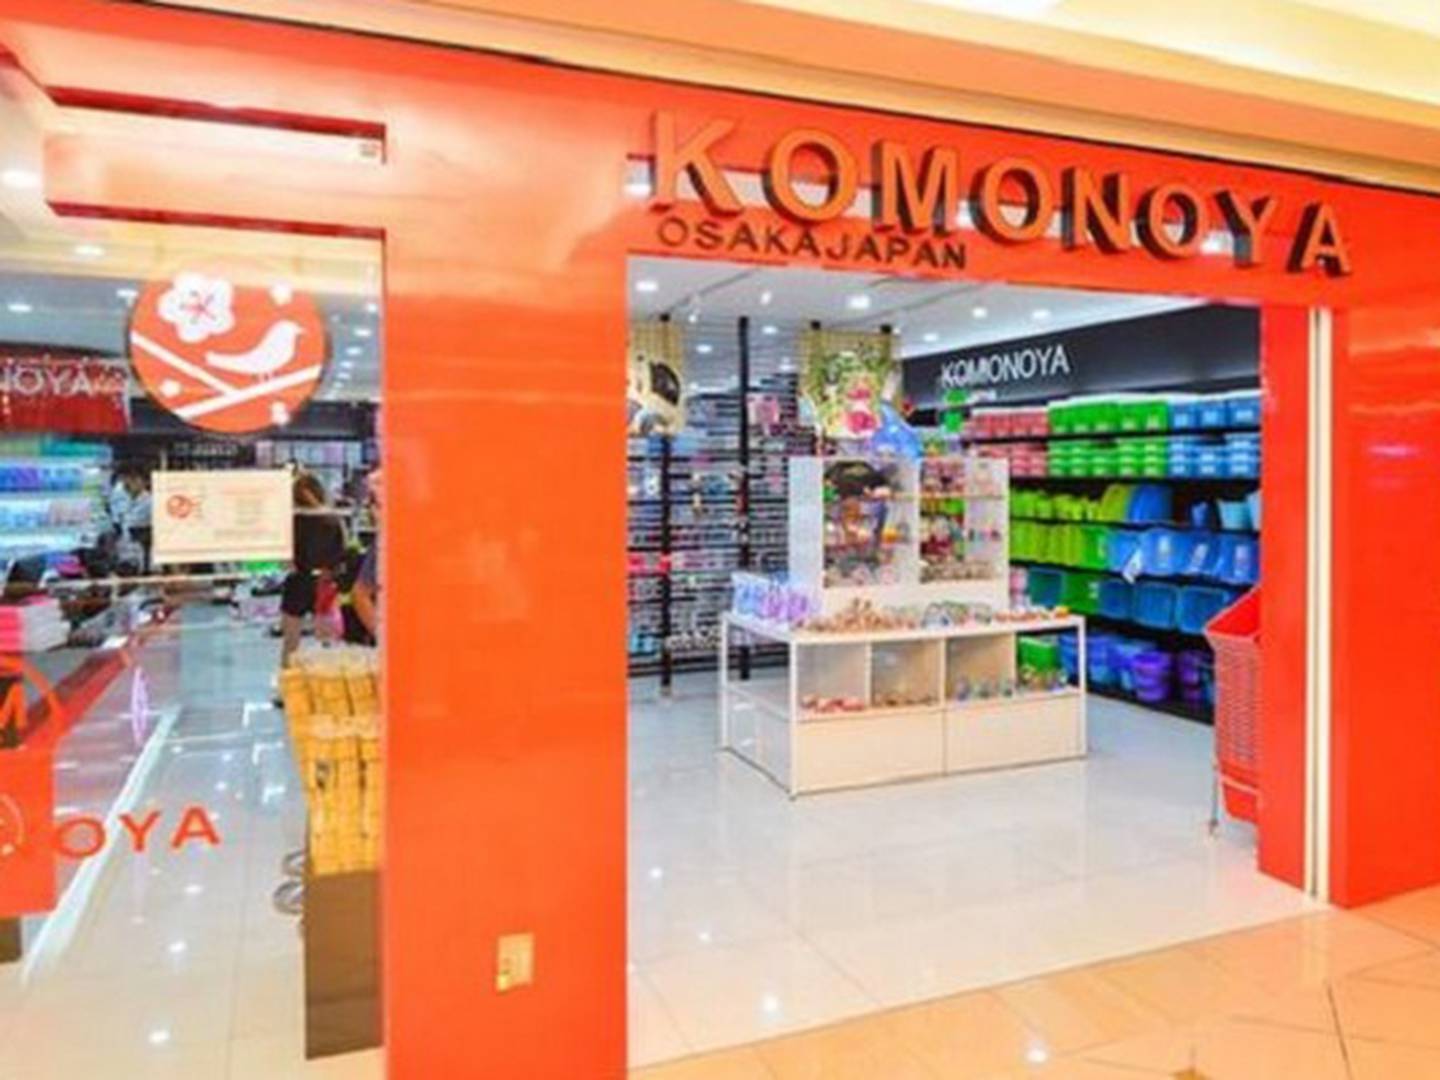 Komonoya Perú - Ahora en tiendas Komonoya Perú. Rodillo quitapelusas + 2  repuestos 😍. Adquierelo en tu tienda más cercana. ¡Te esperamos! 😉.  #komonoya #peru #articulos #rodillo #quitapelusas #repuestos